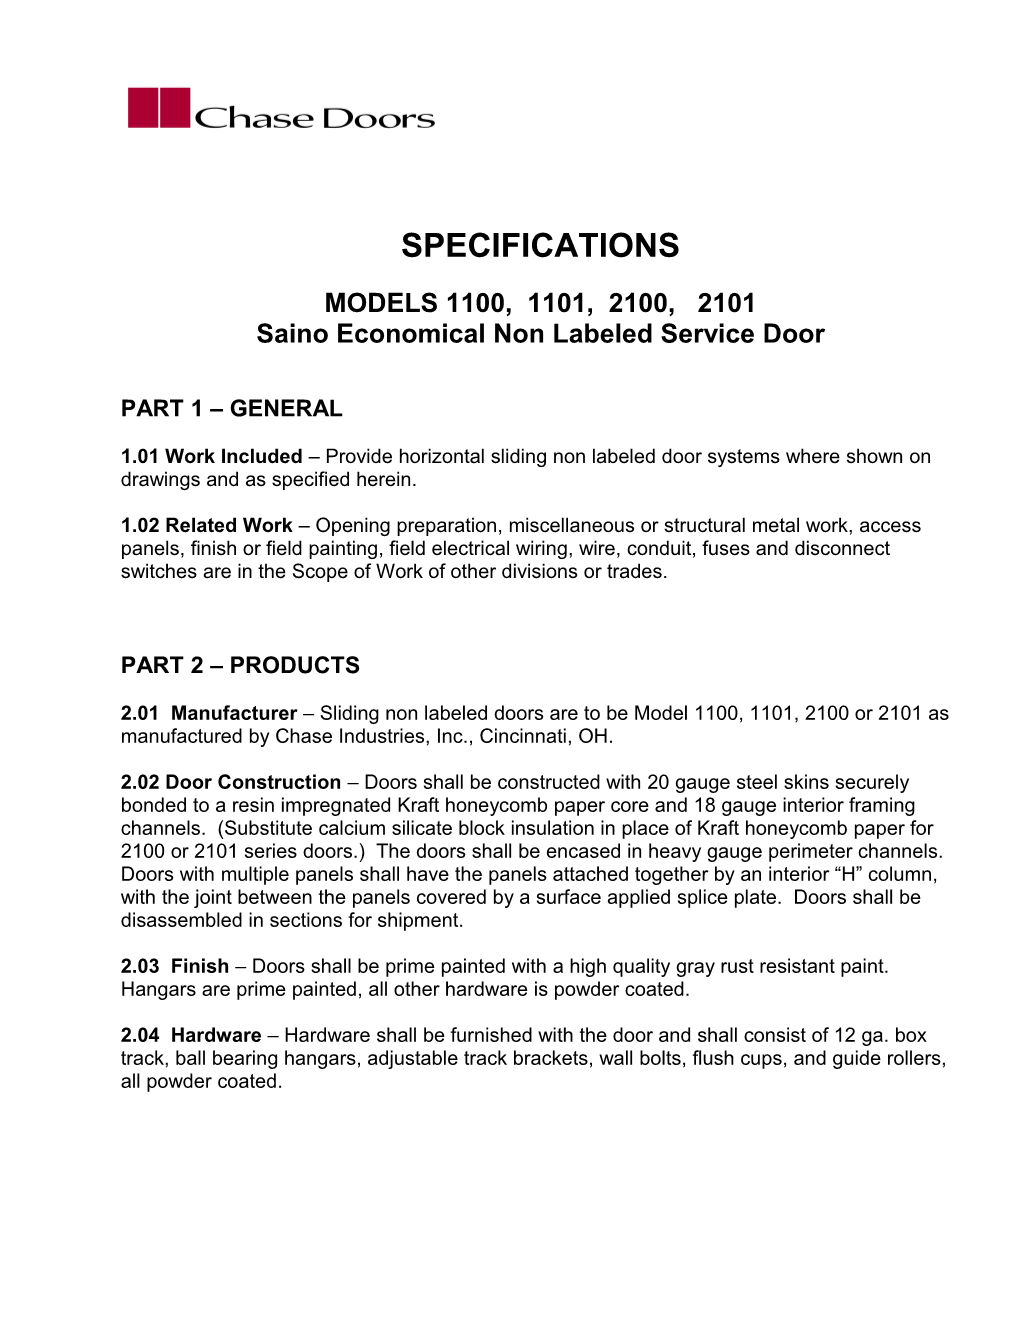 Saino Economical Non Labeled Service Door